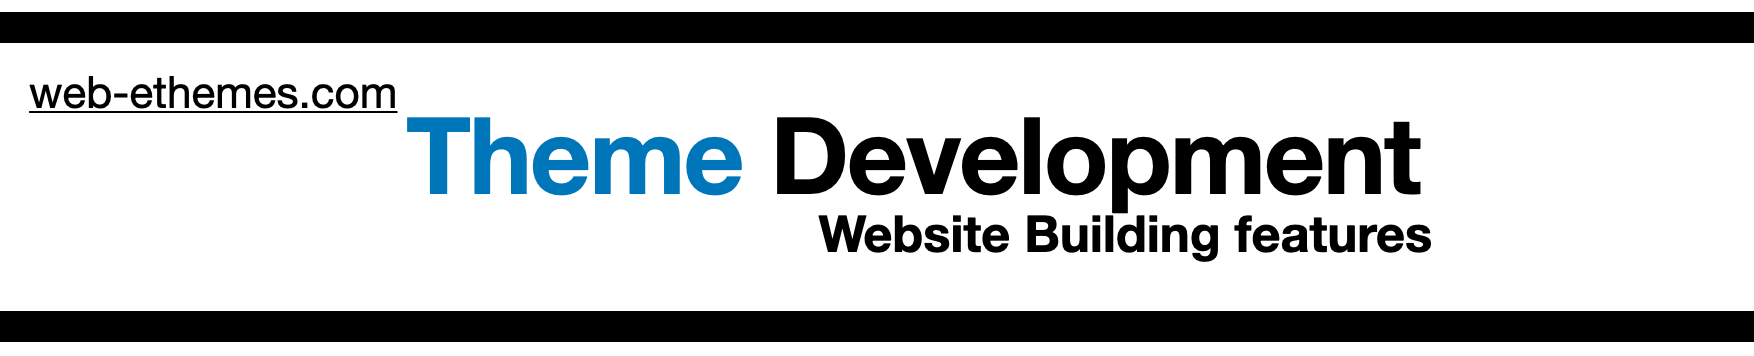 Theme Development   Web-ethemes.com